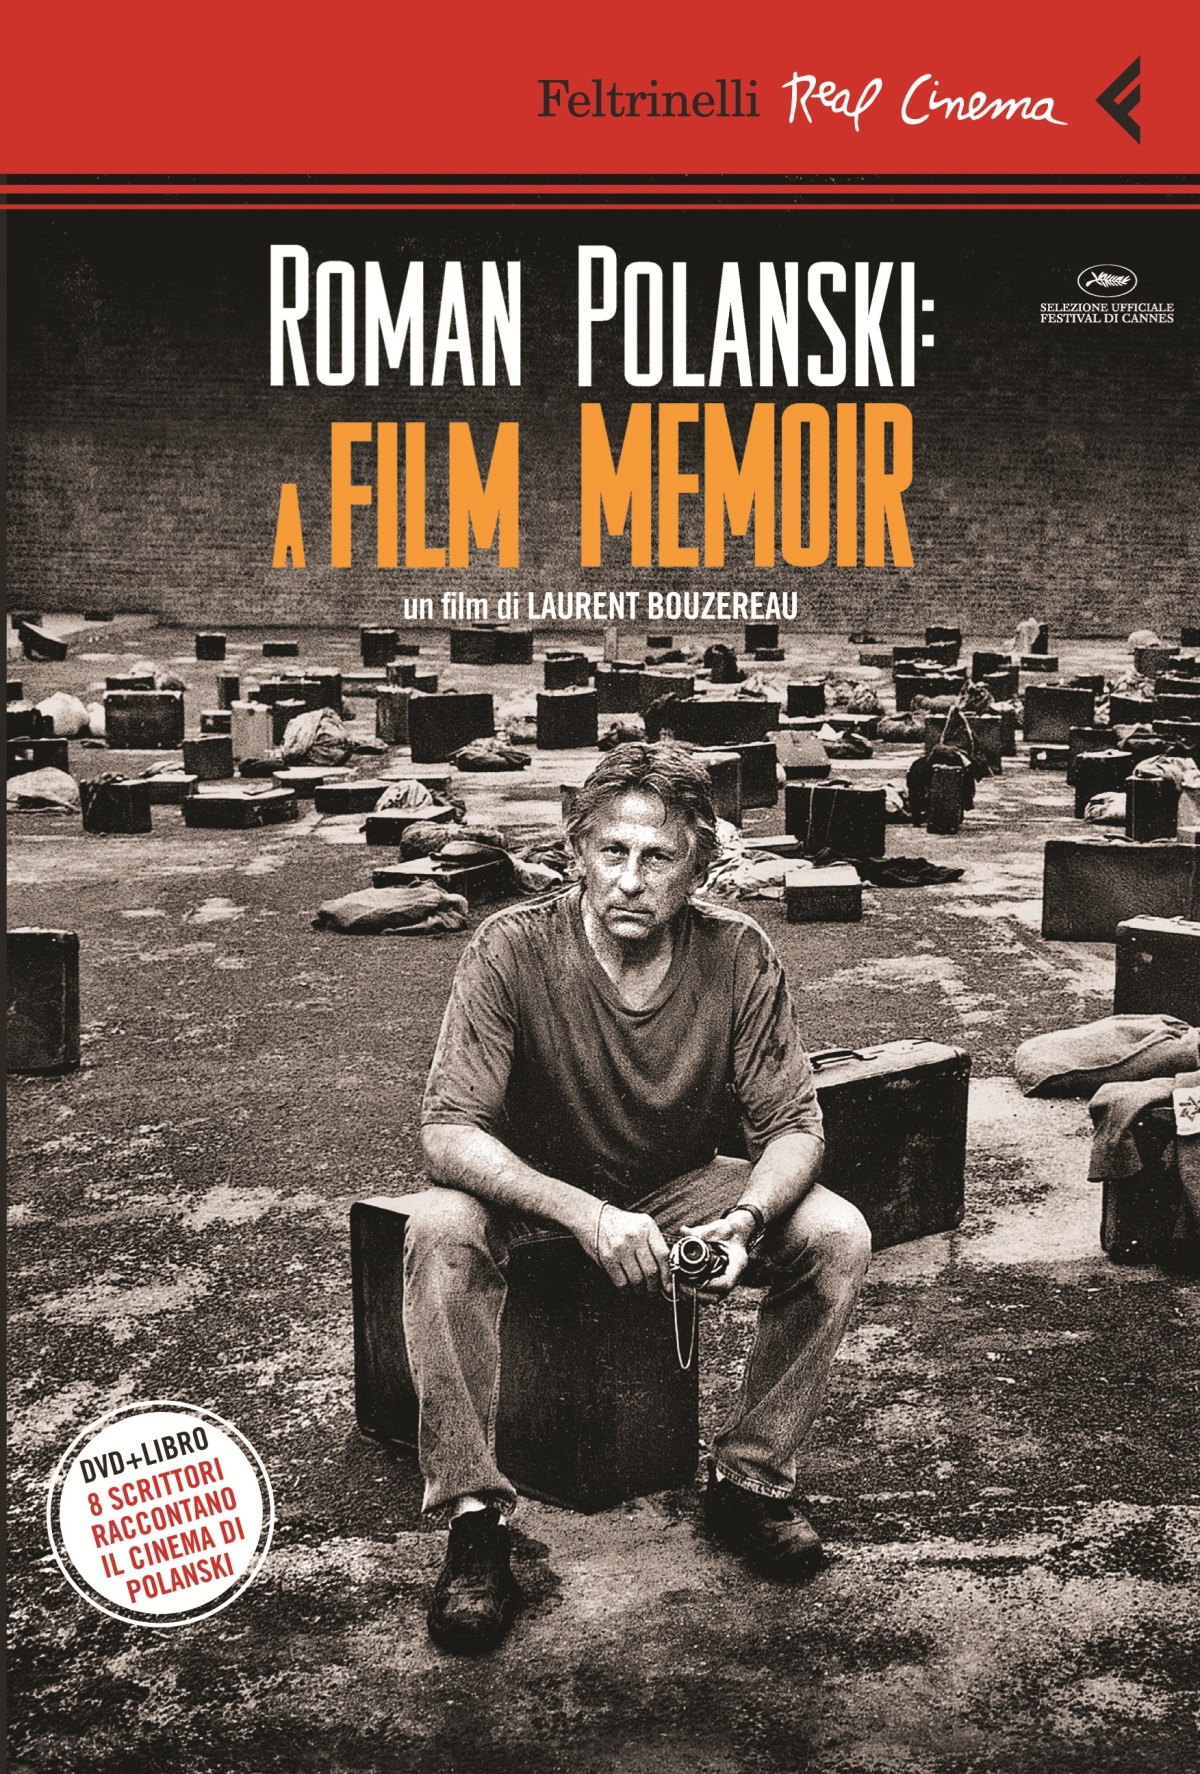 http://thesmokers.files.wordpress.com/2013/07/roman-polanski-a-film-memoir-cover2.jpg?w=1200